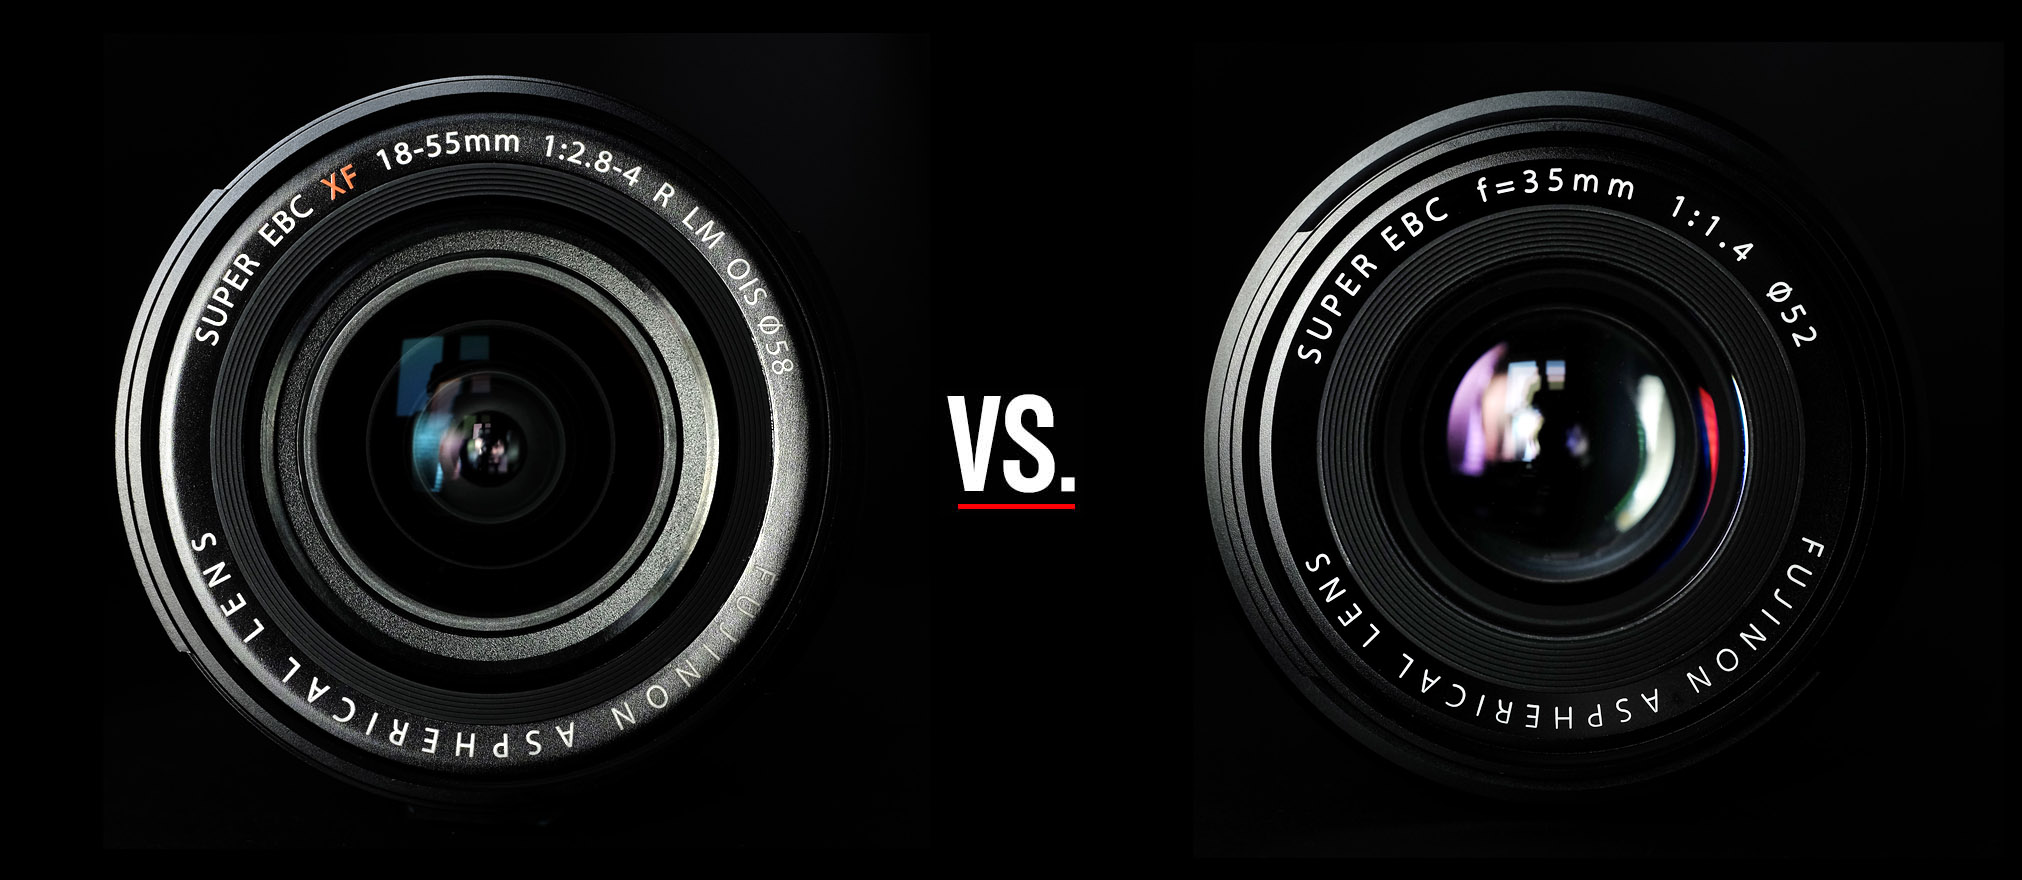 Fuji XF 18-55mm F2.8-4 OIS vs. XF 35mm F1.4 — Fuji vs. Fuji